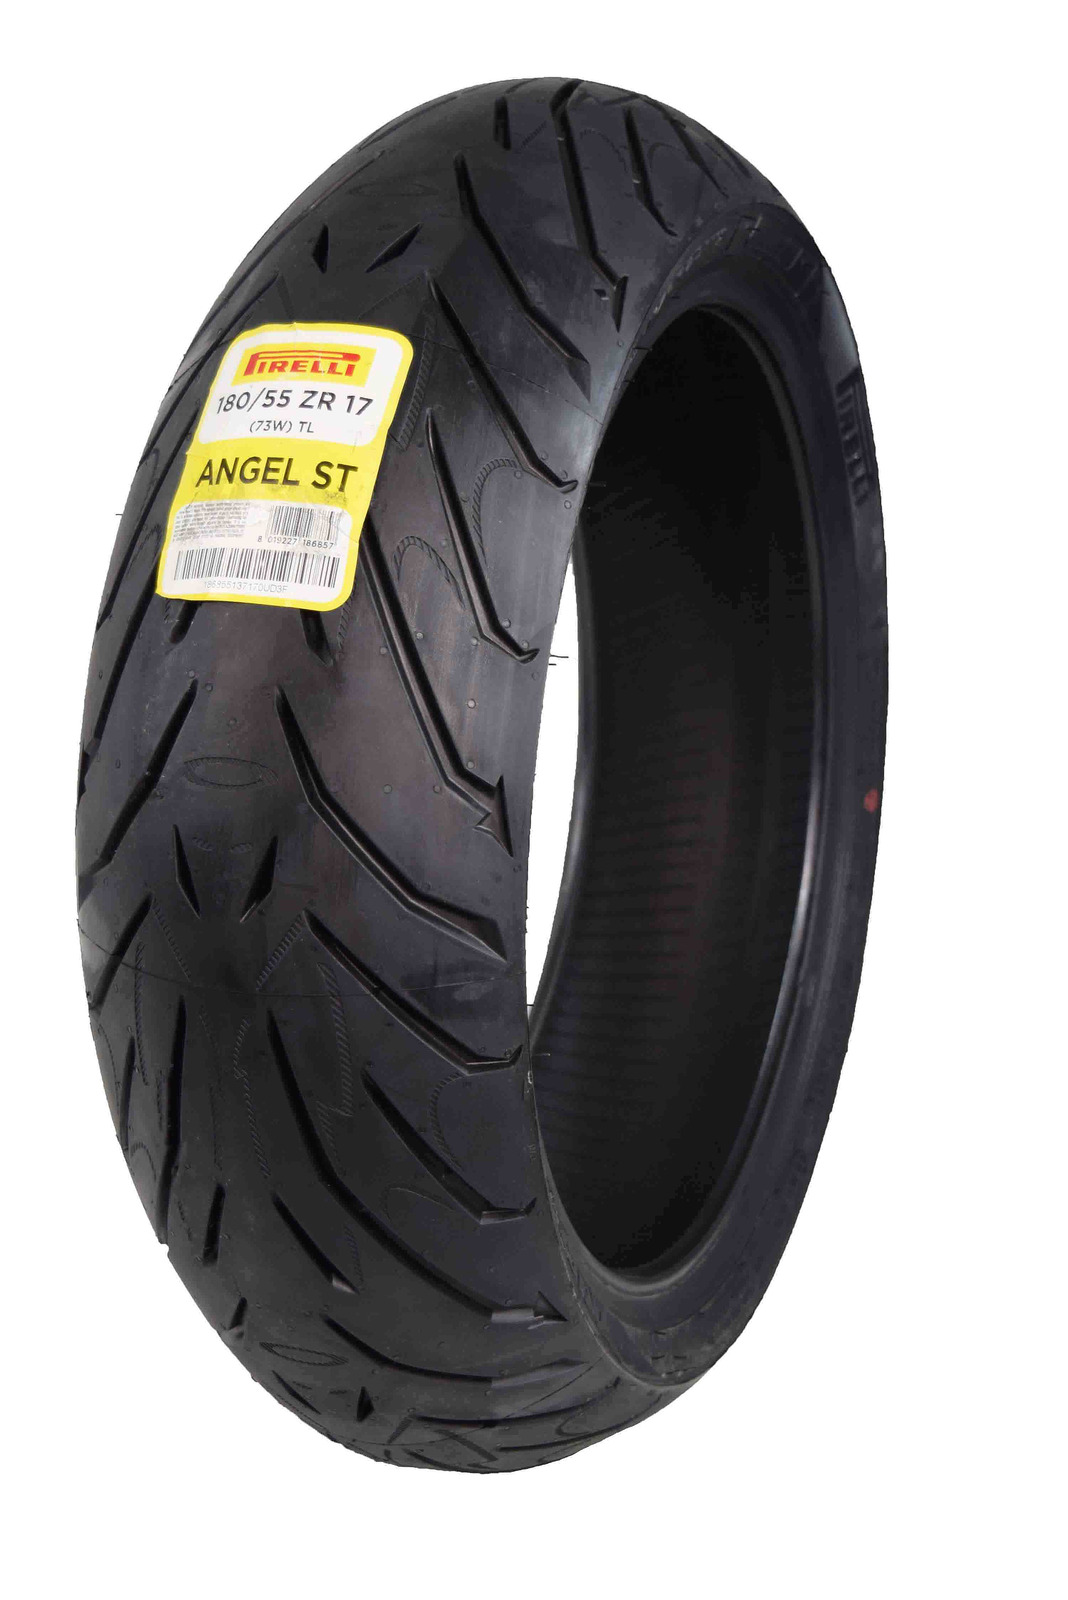 Pirelli Angel ST 180/55ZR17 Rear Sport Touring Motorcycle Tire  180/55-17 Single